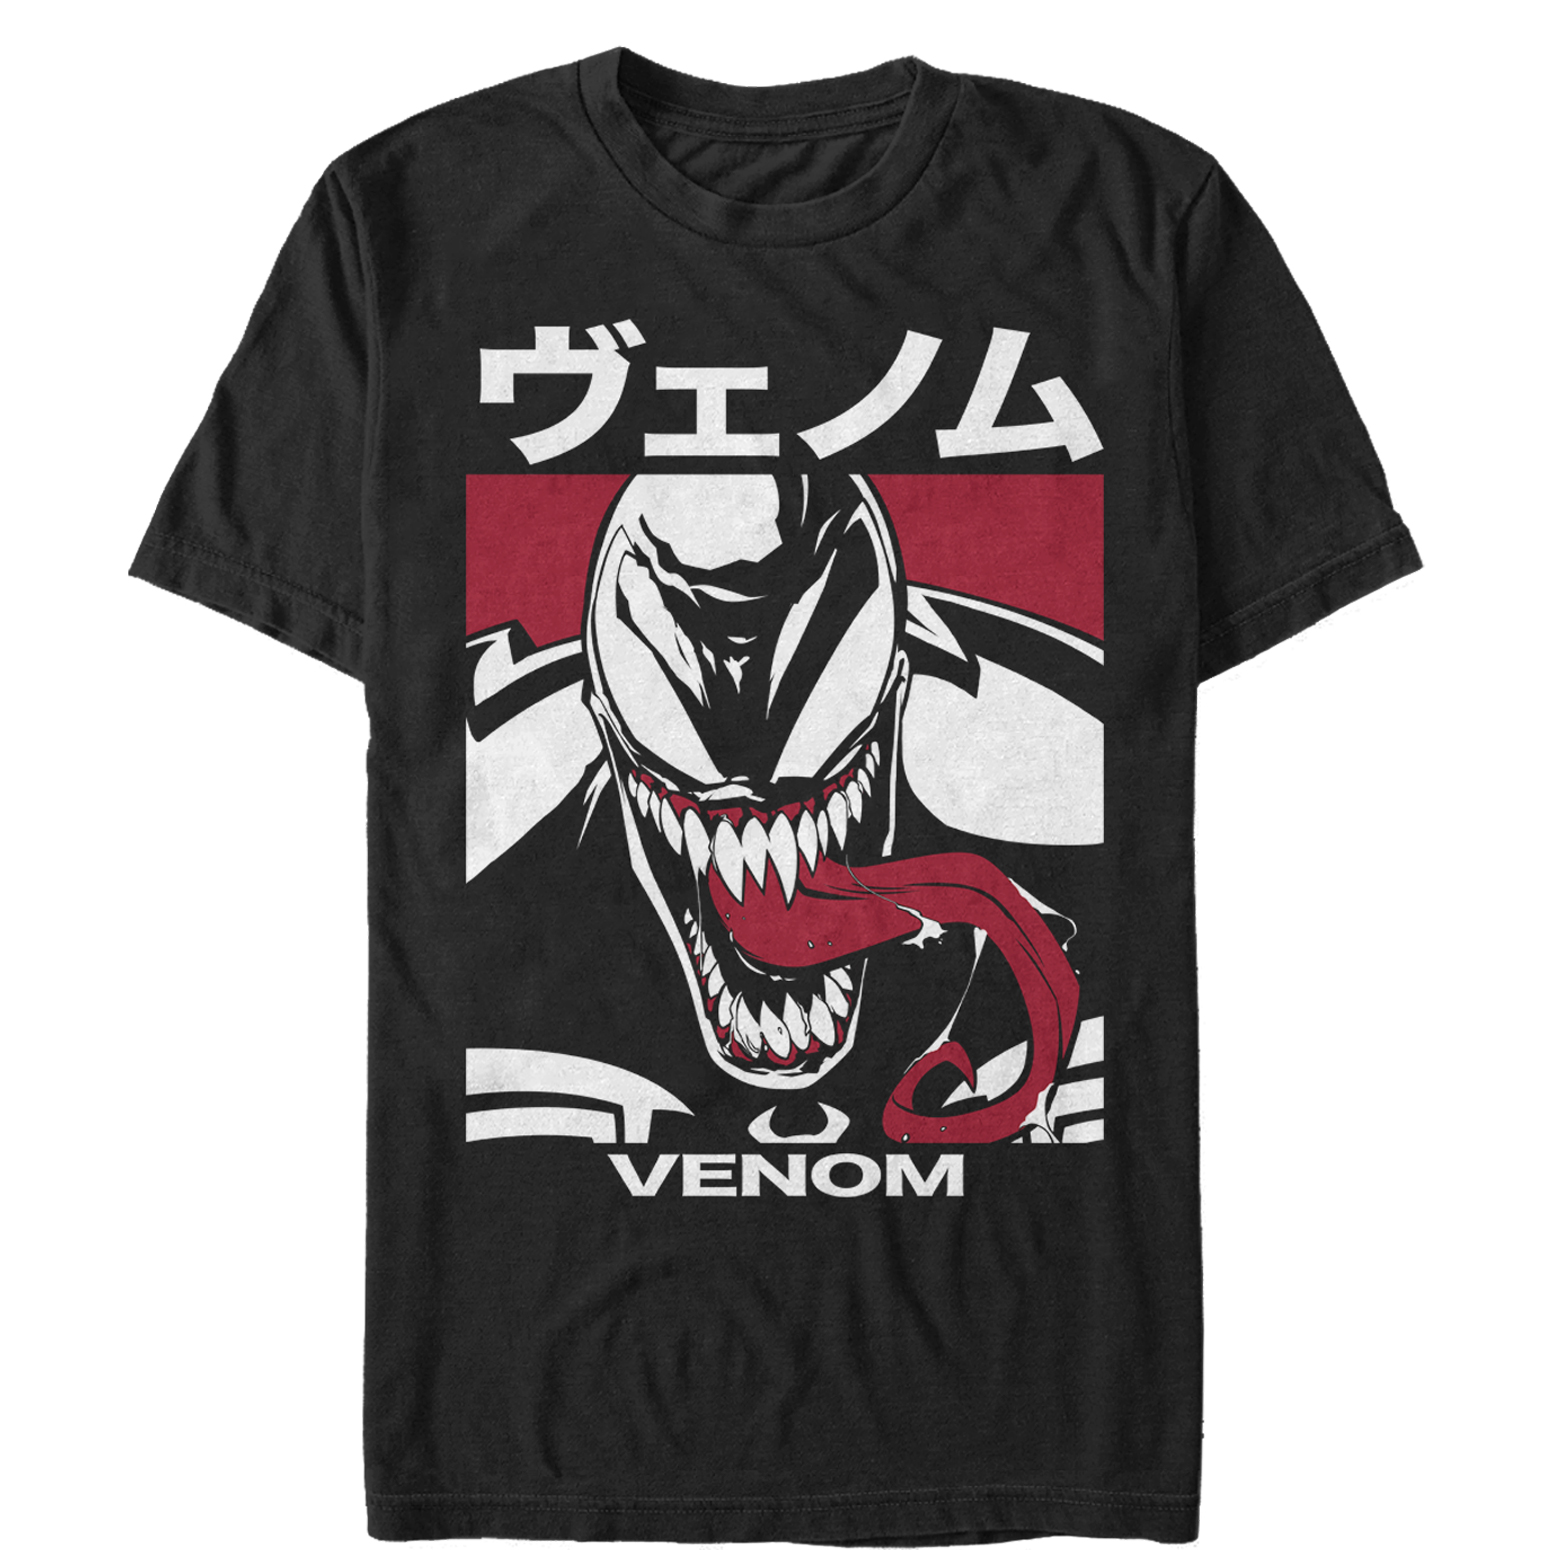 Men's Marvel Venom Japanese Kanji Character  Graphic Tee Black Large - image 1 of 4